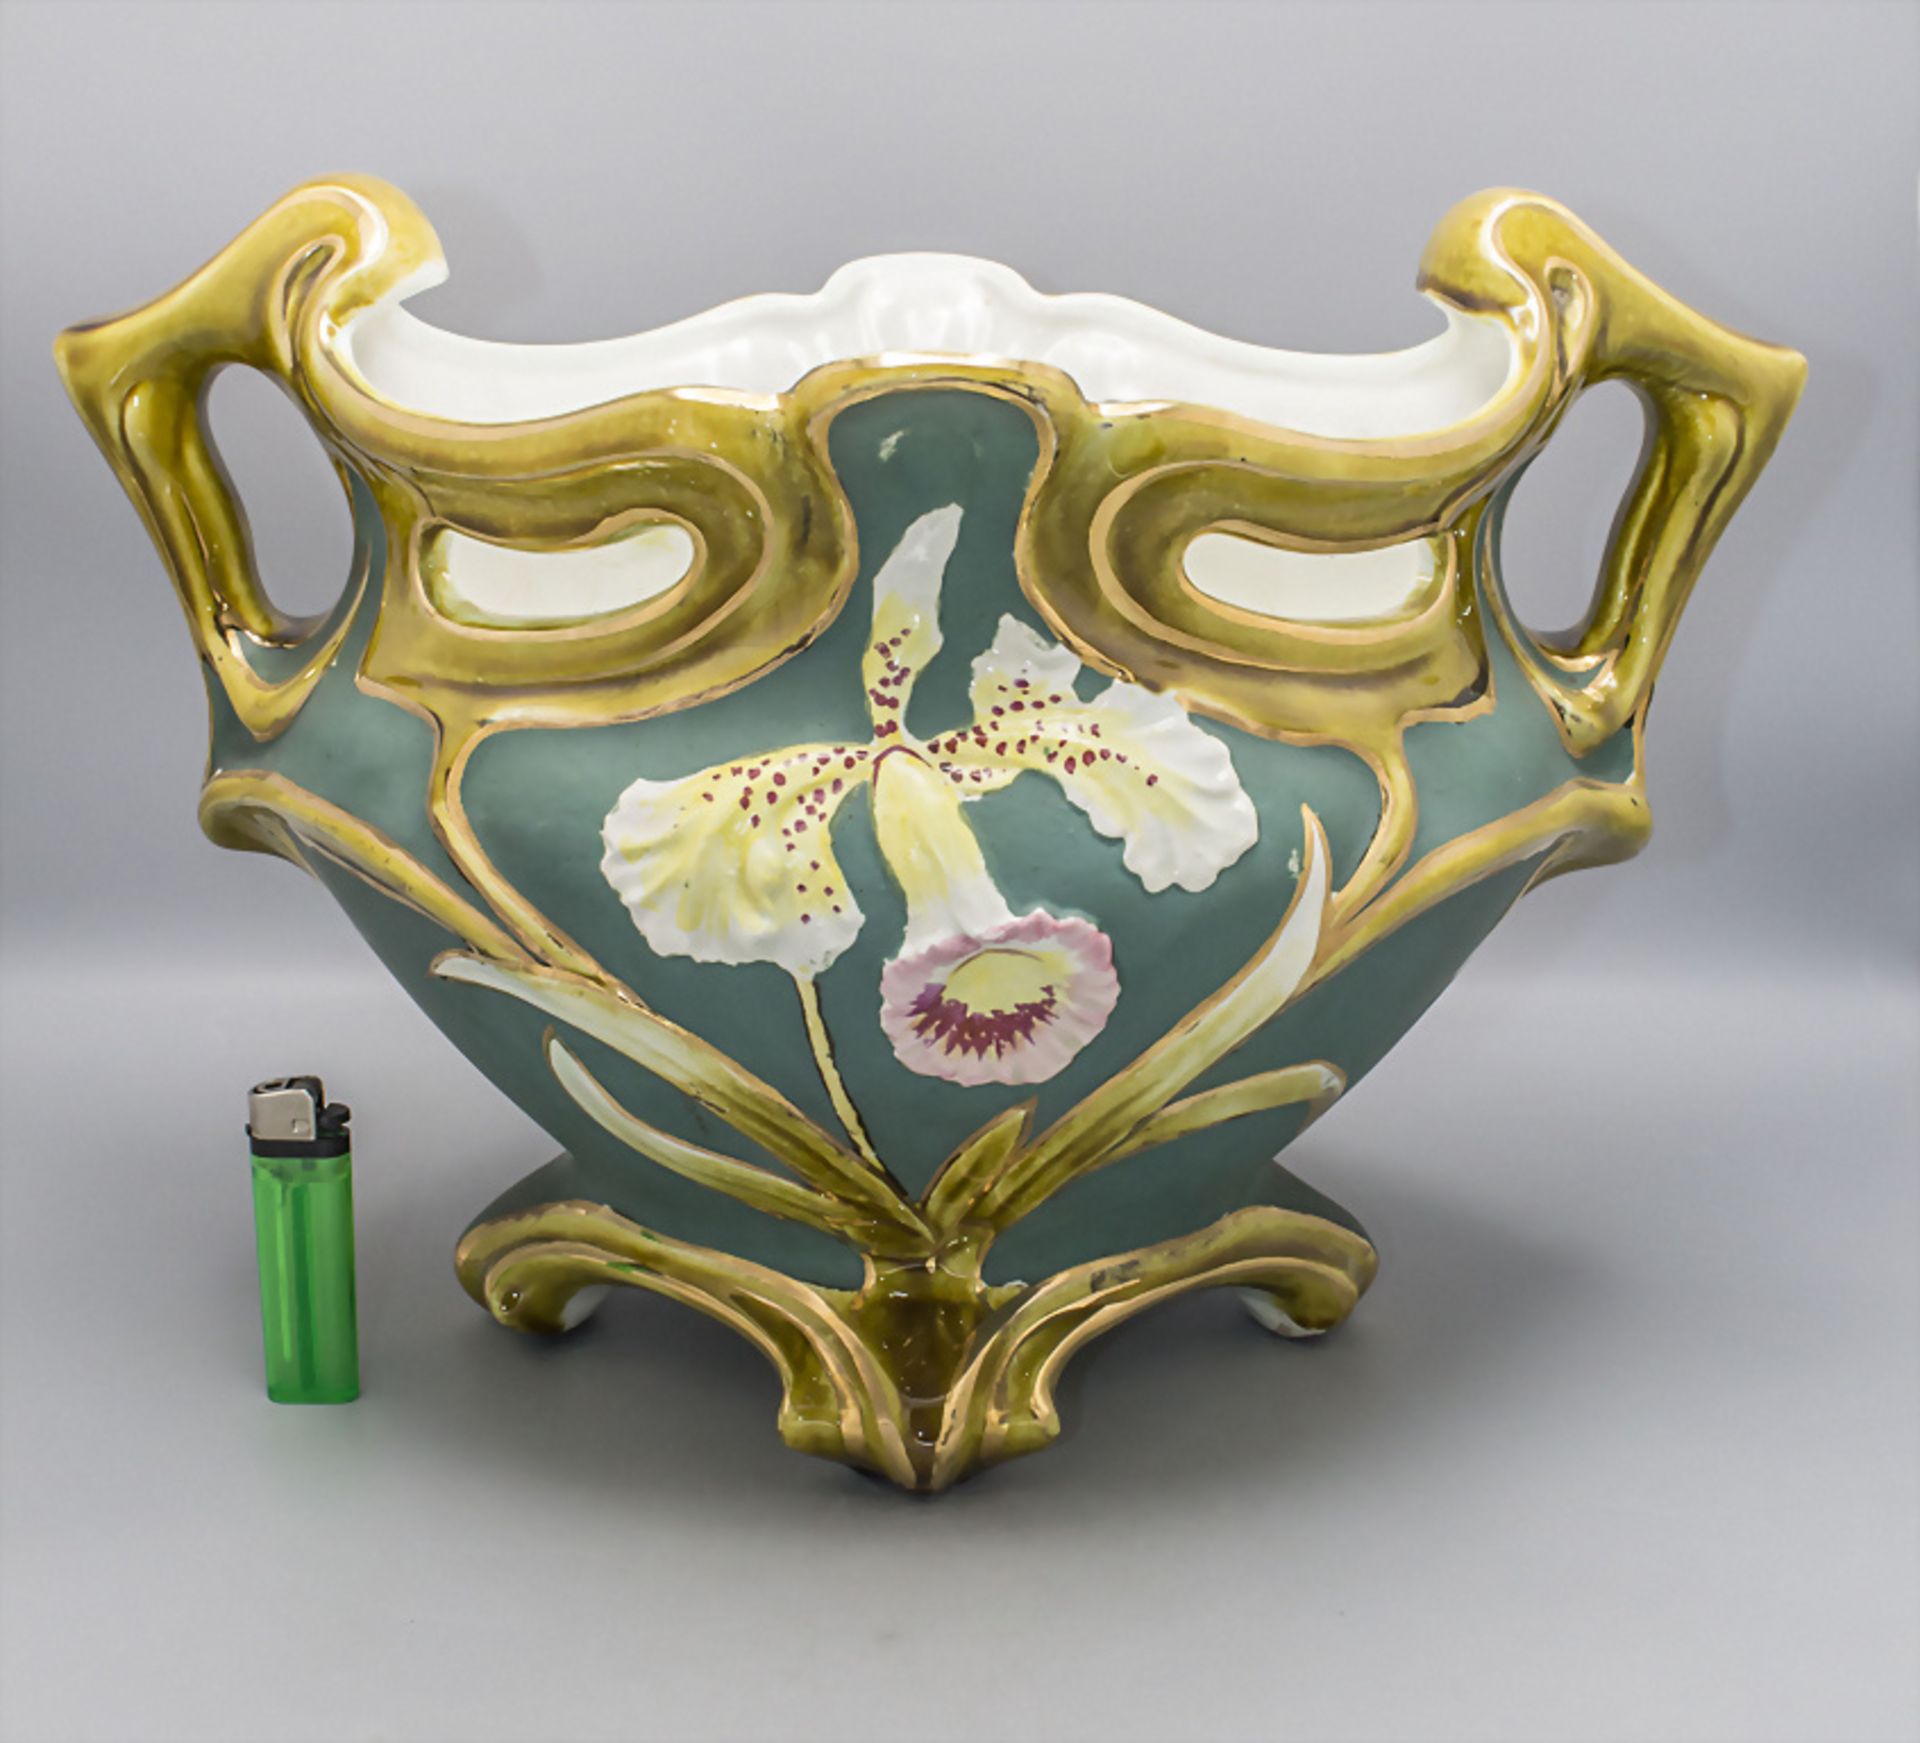 Keramikschale / A ceramic bowl, 20. Jh. - Image 2 of 7